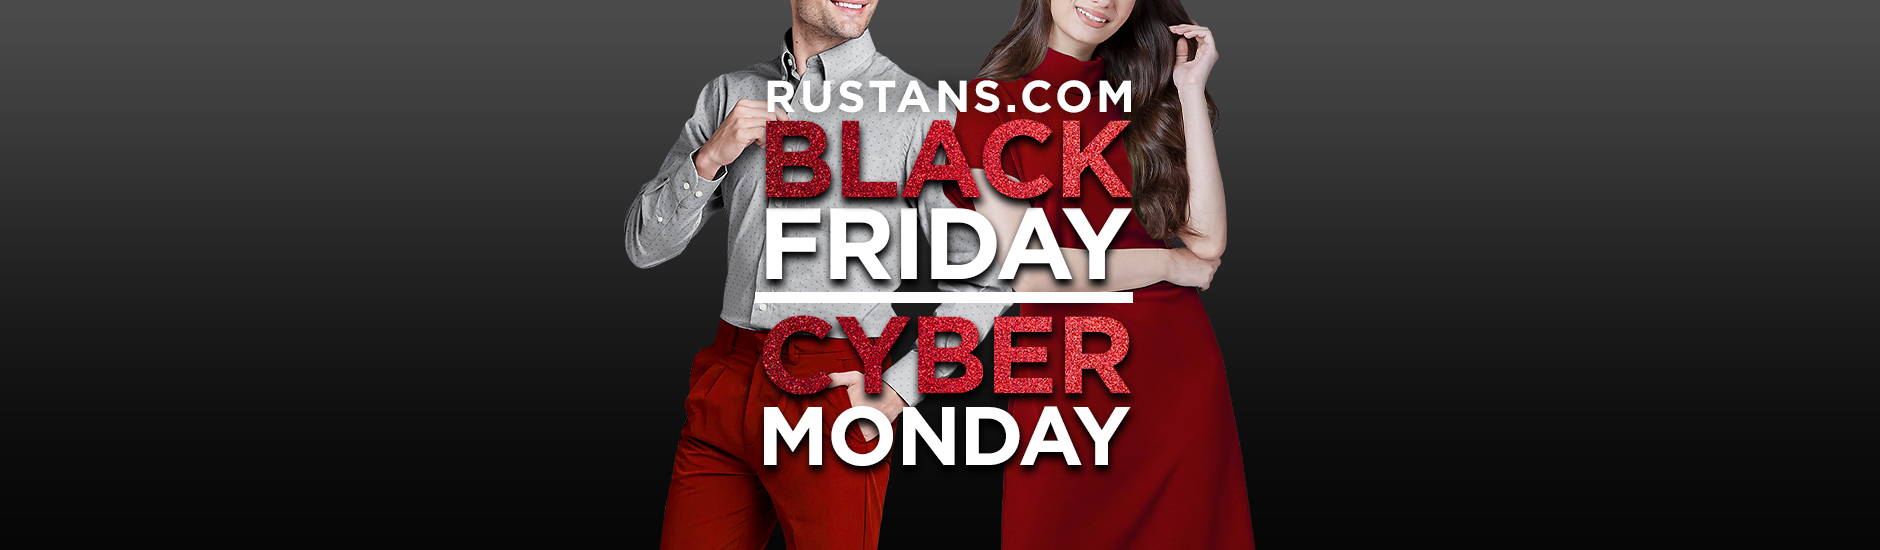 Rustans.com Unveils Black Friday Cyber Monday Deals